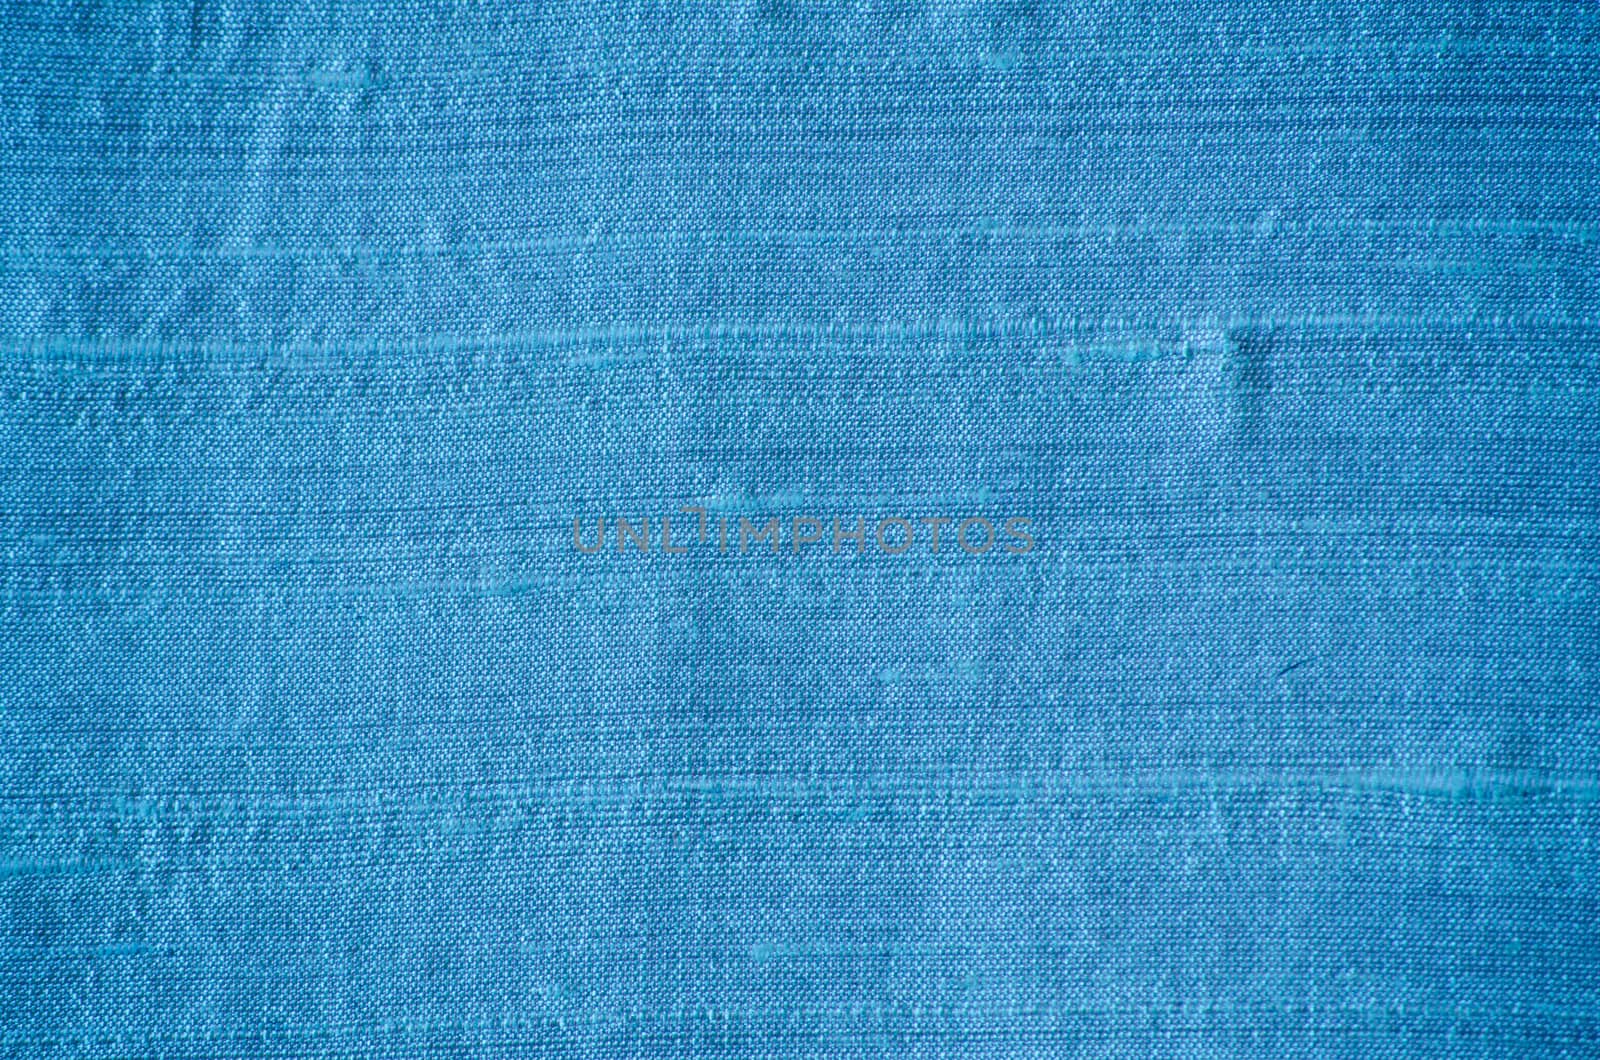 blue silk fabric